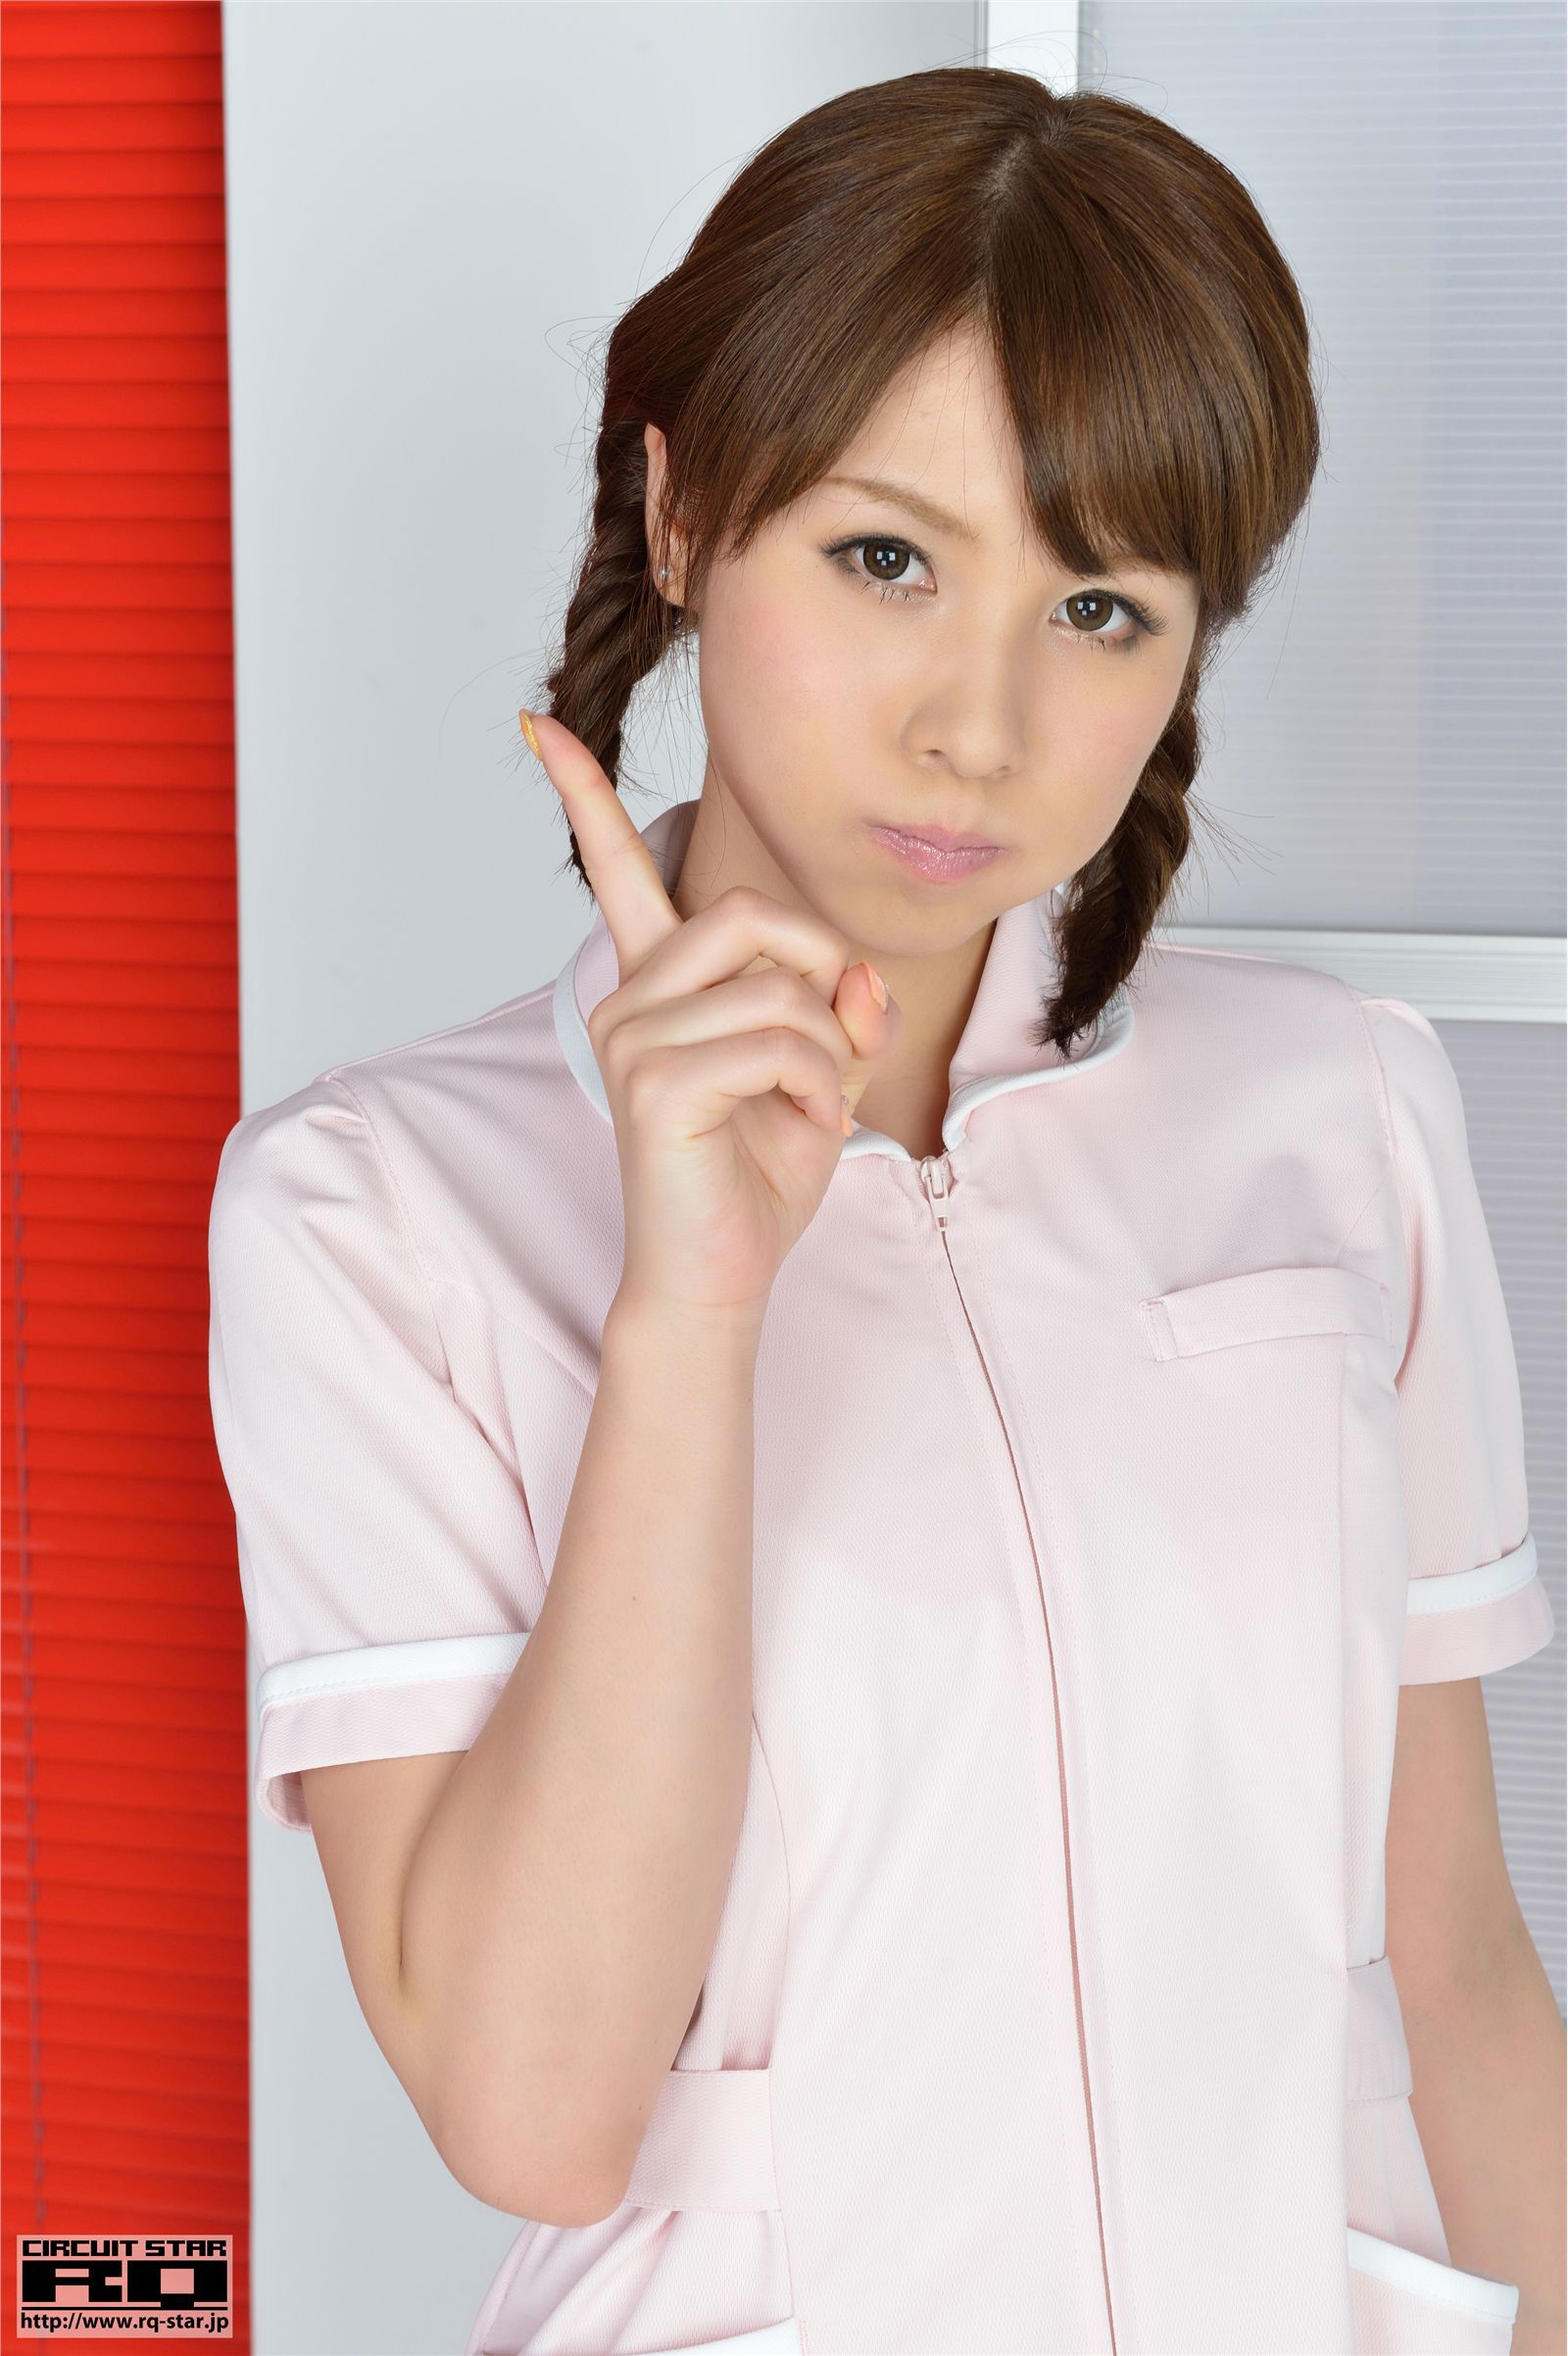 [rq-star] 2016.02.15 no.1157 nurse costume, Tachibana